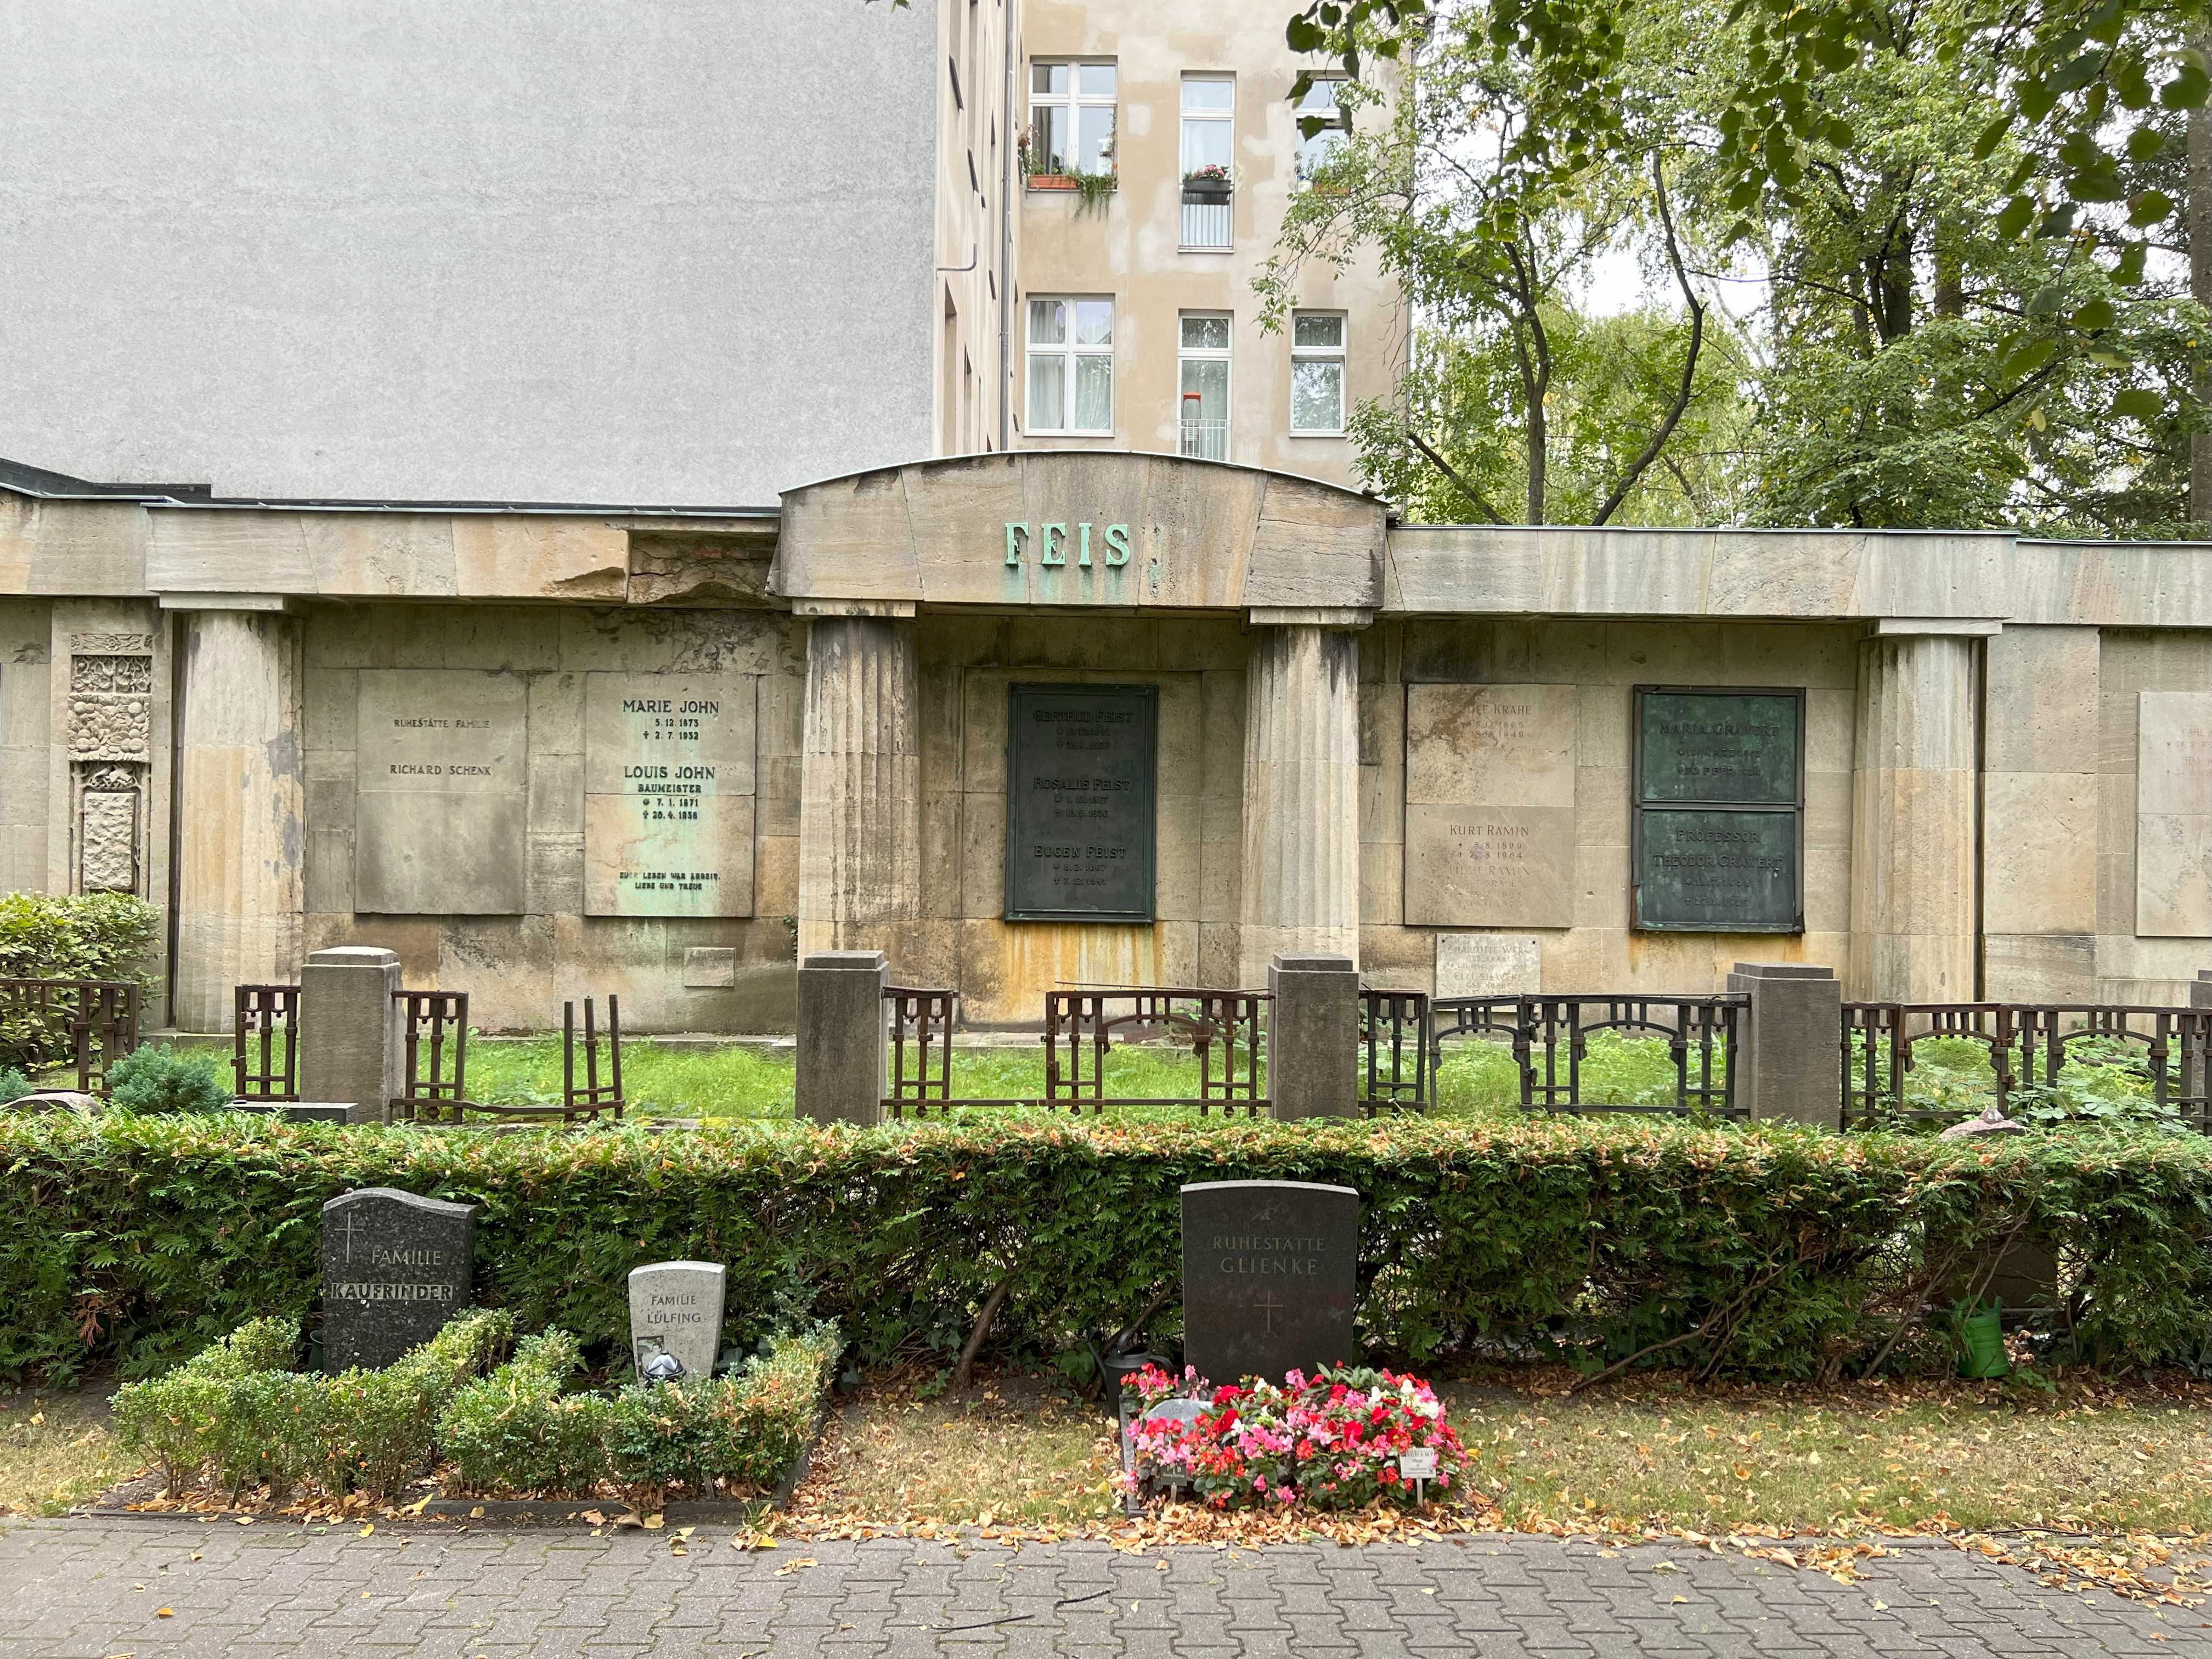 Grabstein Gertrud Feist, Friedhof Wilmersdorf, Berlin